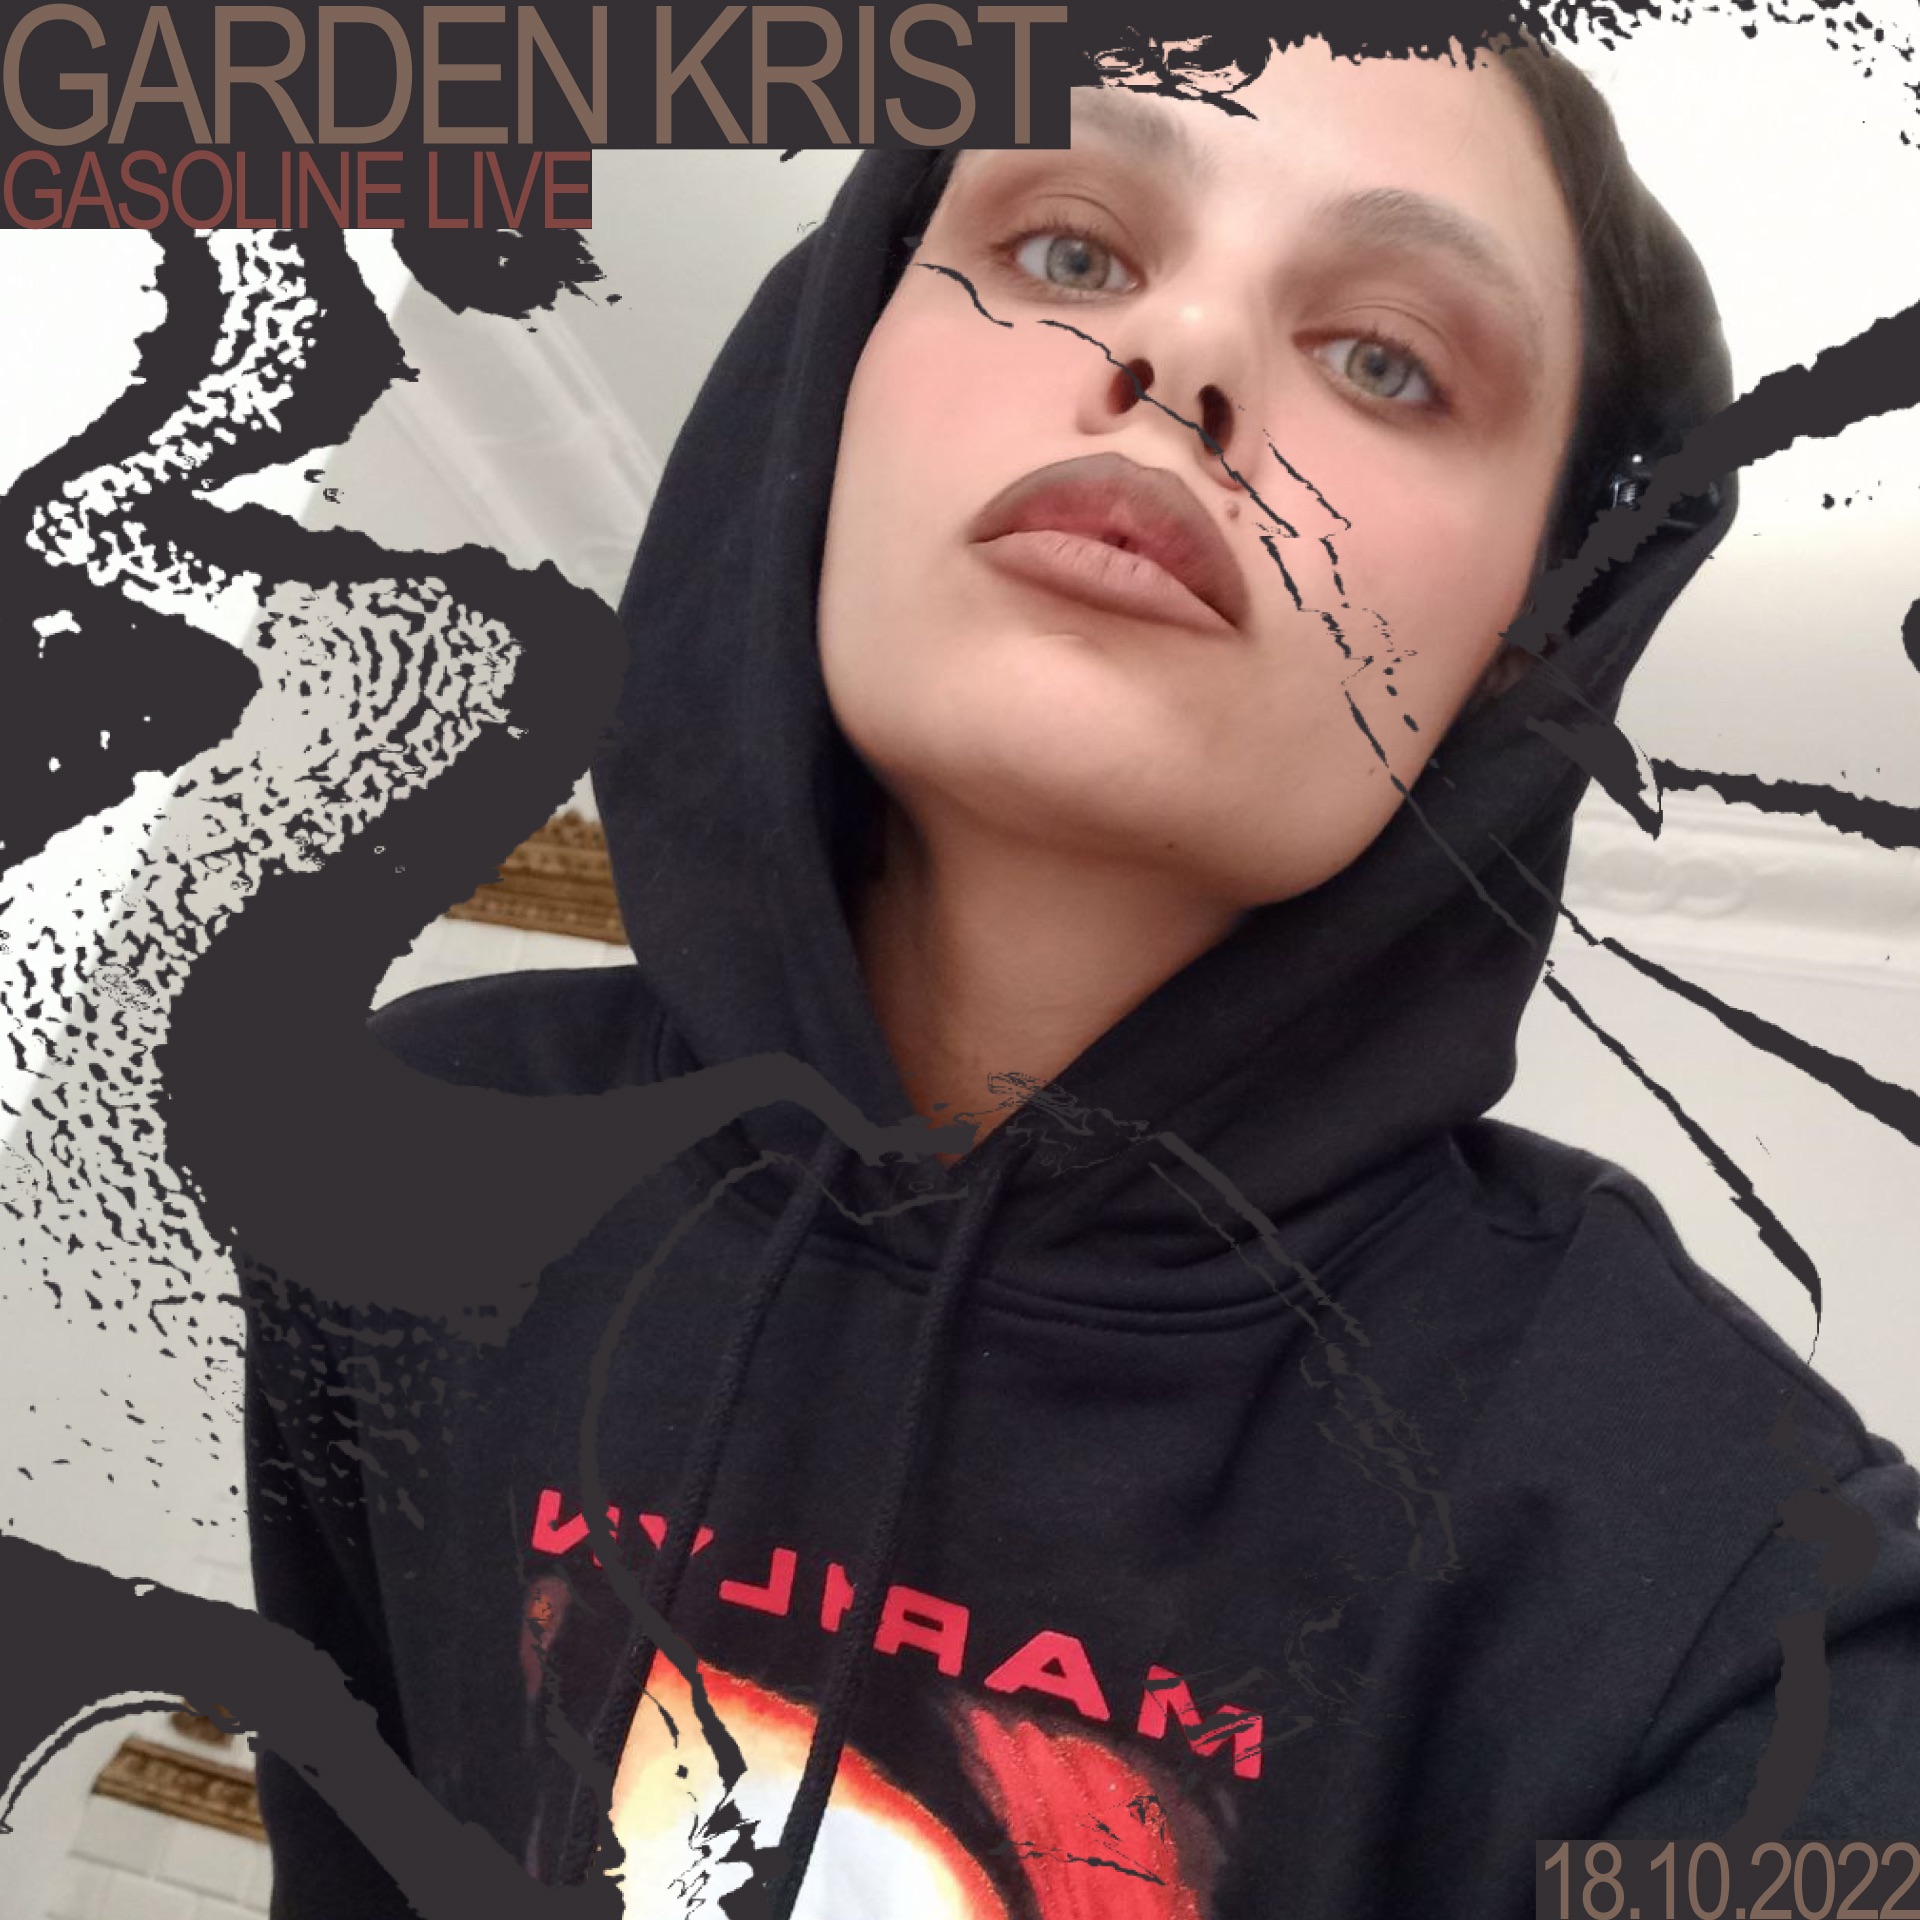 Khuphela GASOLINE GUEST MIX: GARDEN KRIST (LIVE) 18/10/2022